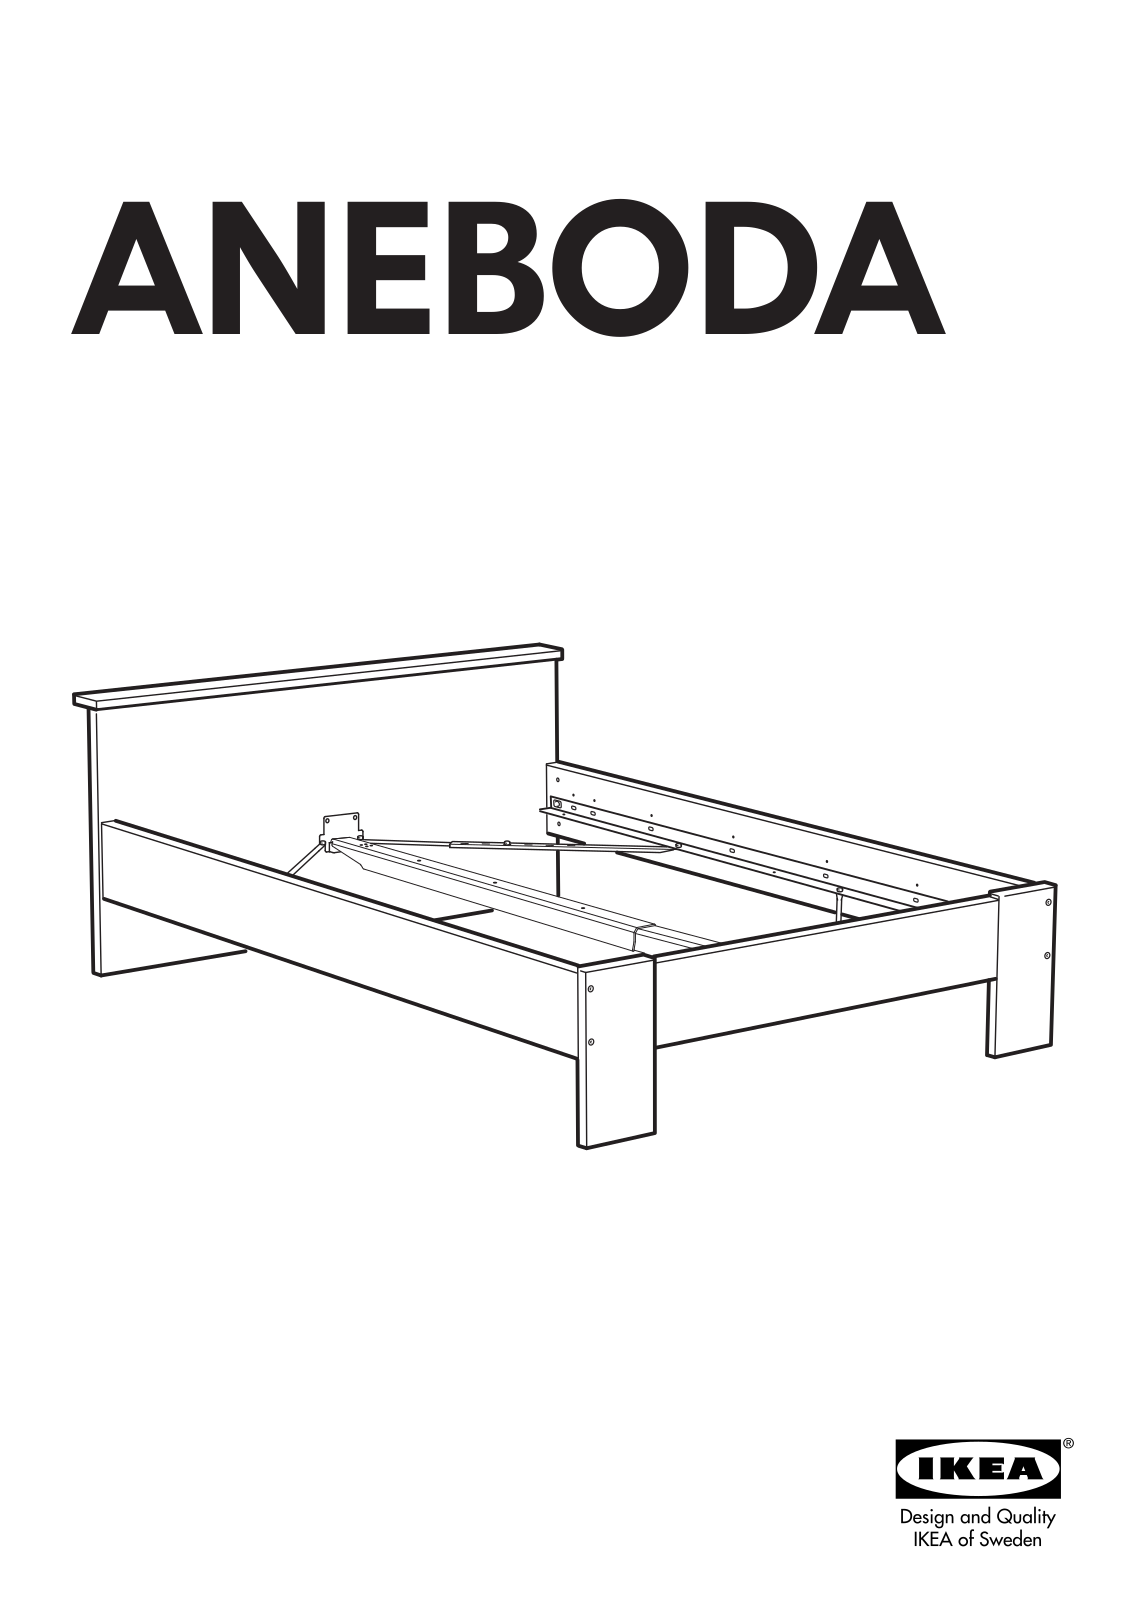 IKEA ANEBODA User Manual